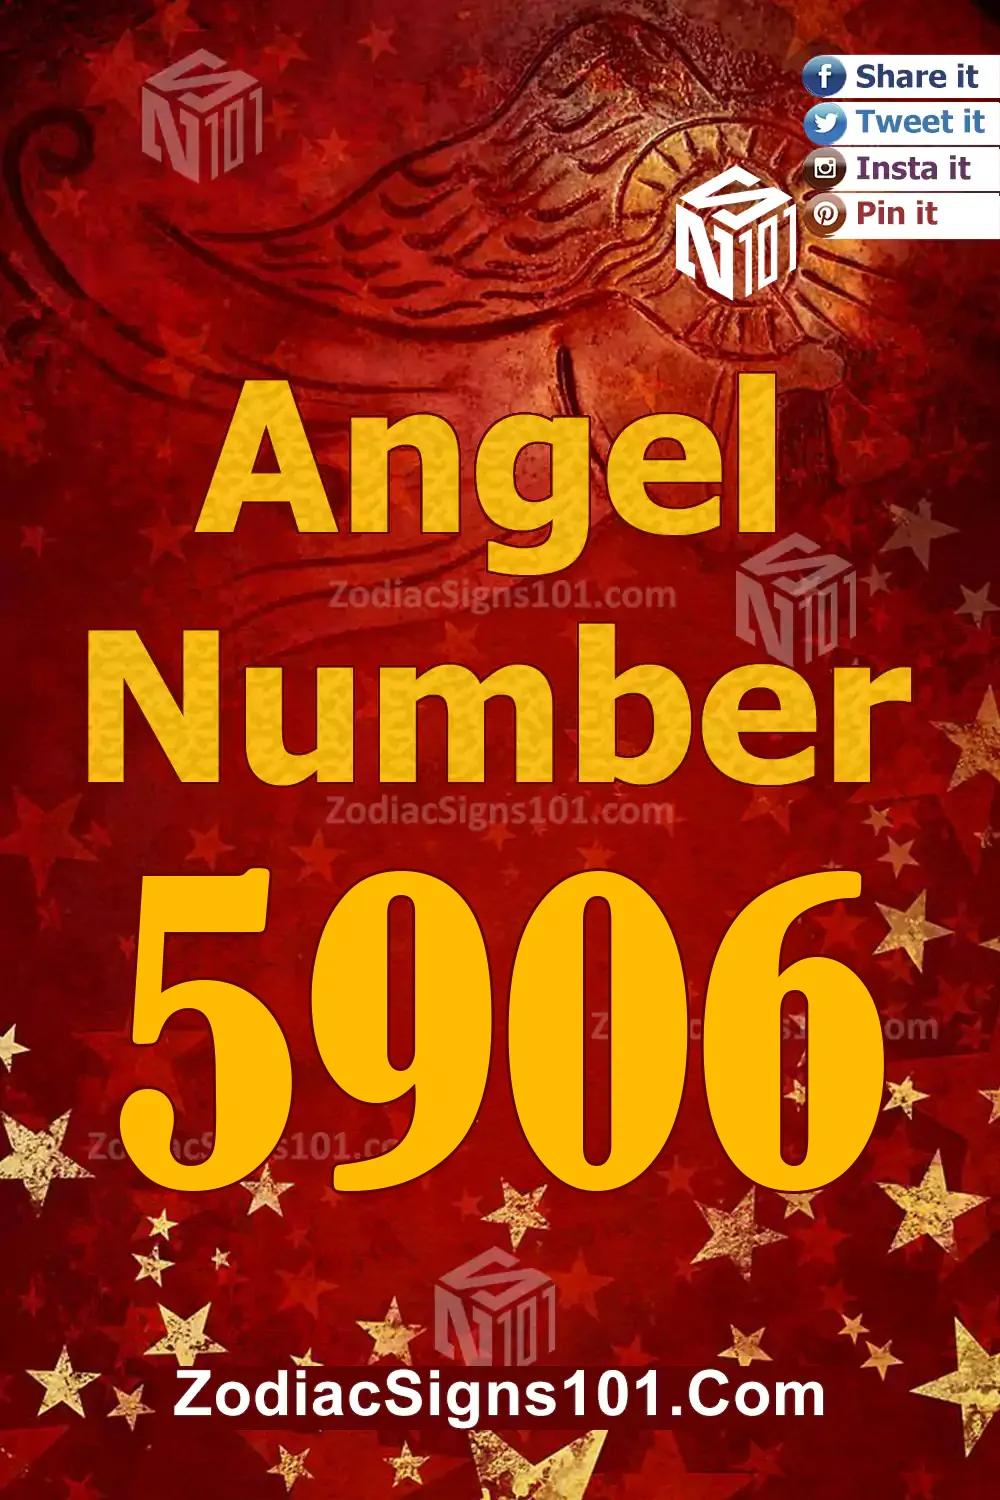 5906-Angel-Number-Meaning.jpg